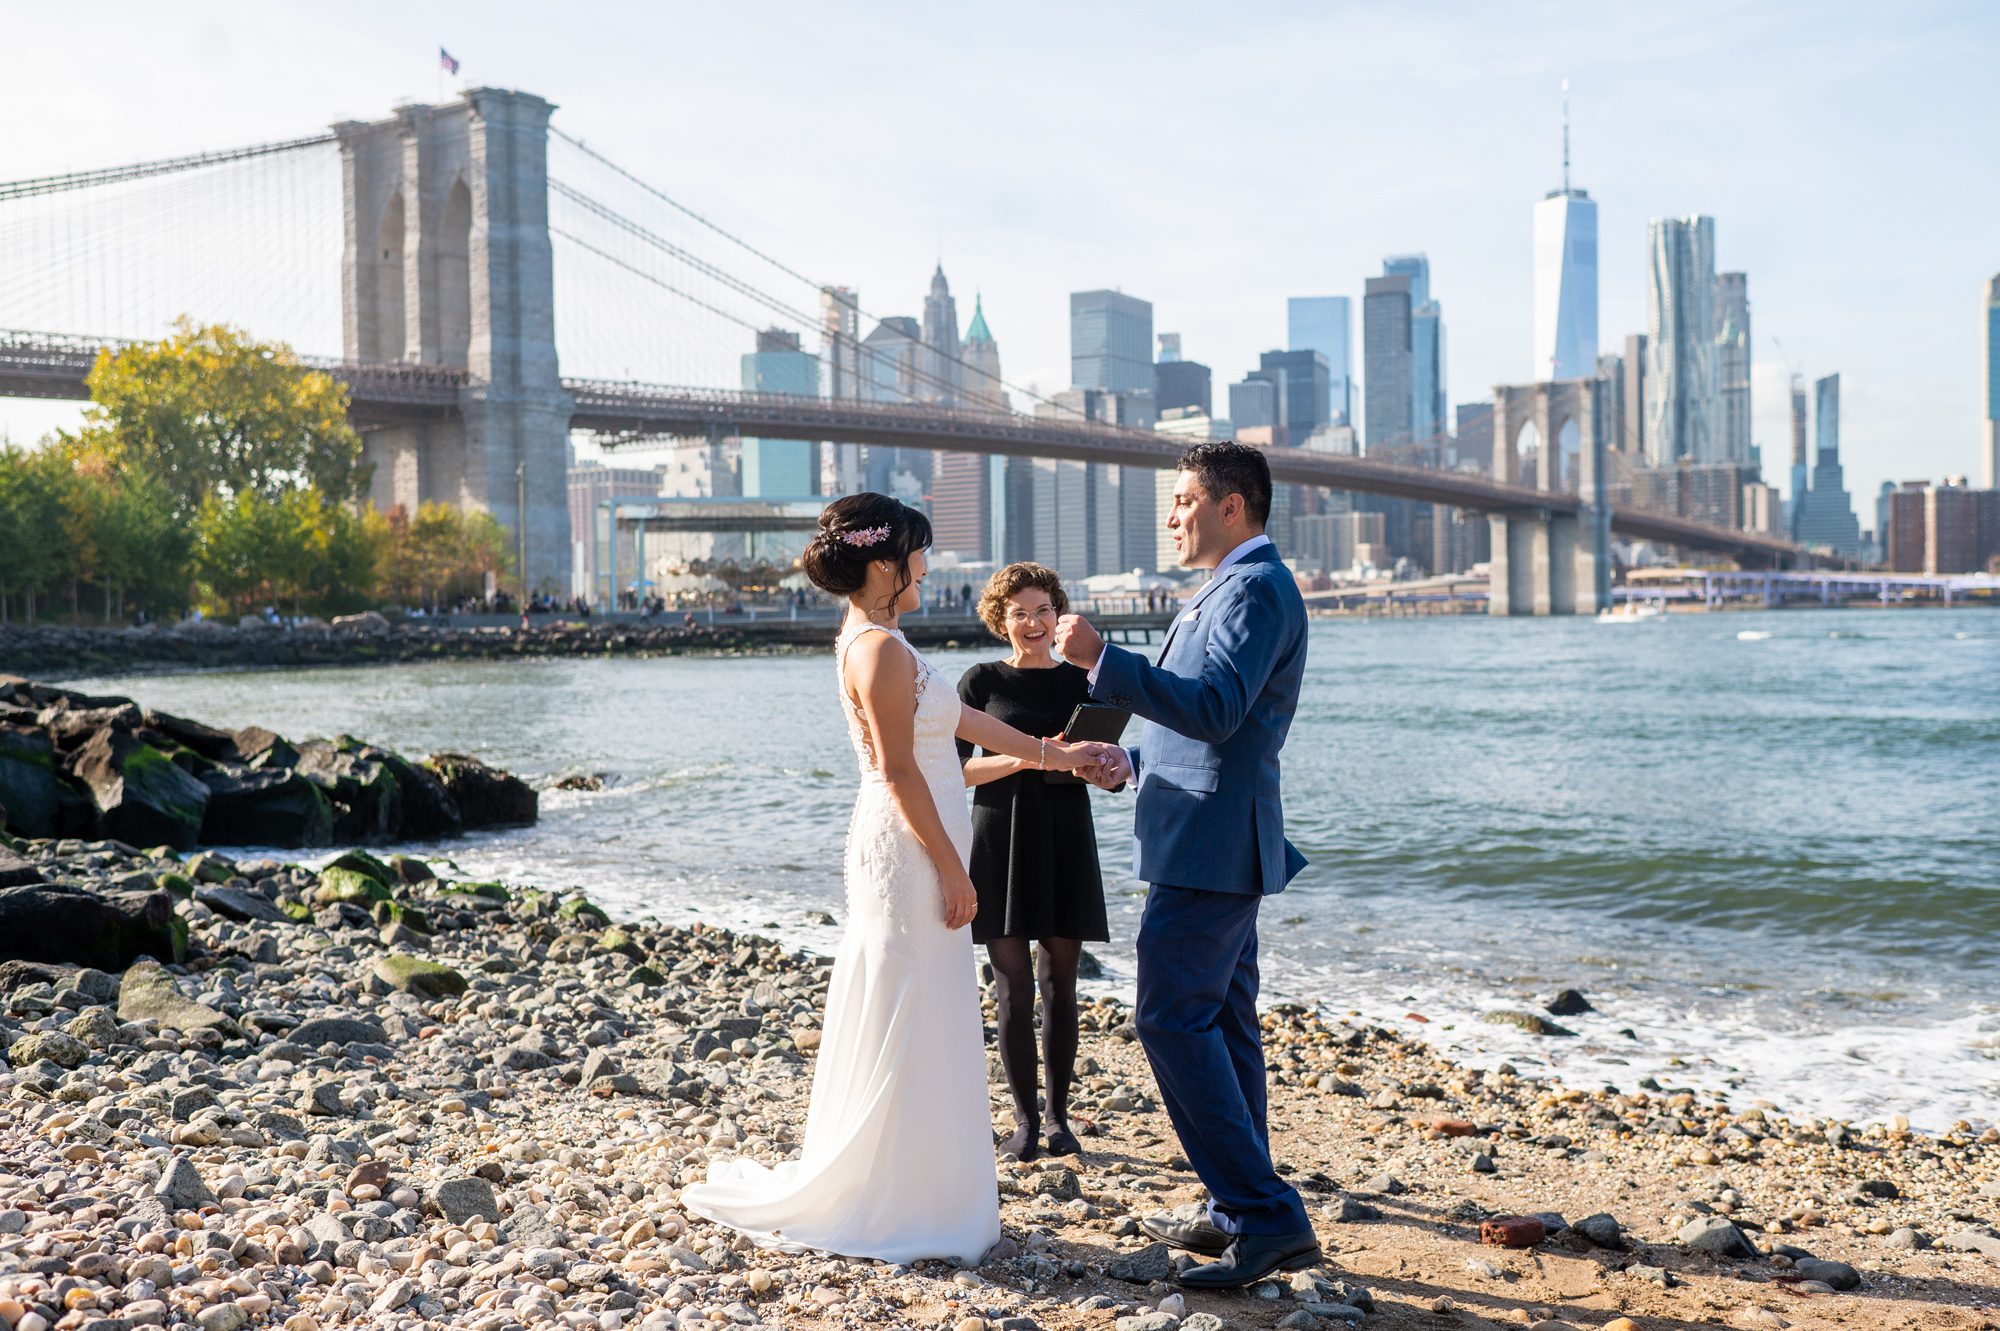 A couple eloping in Brooklyn Bridge Park